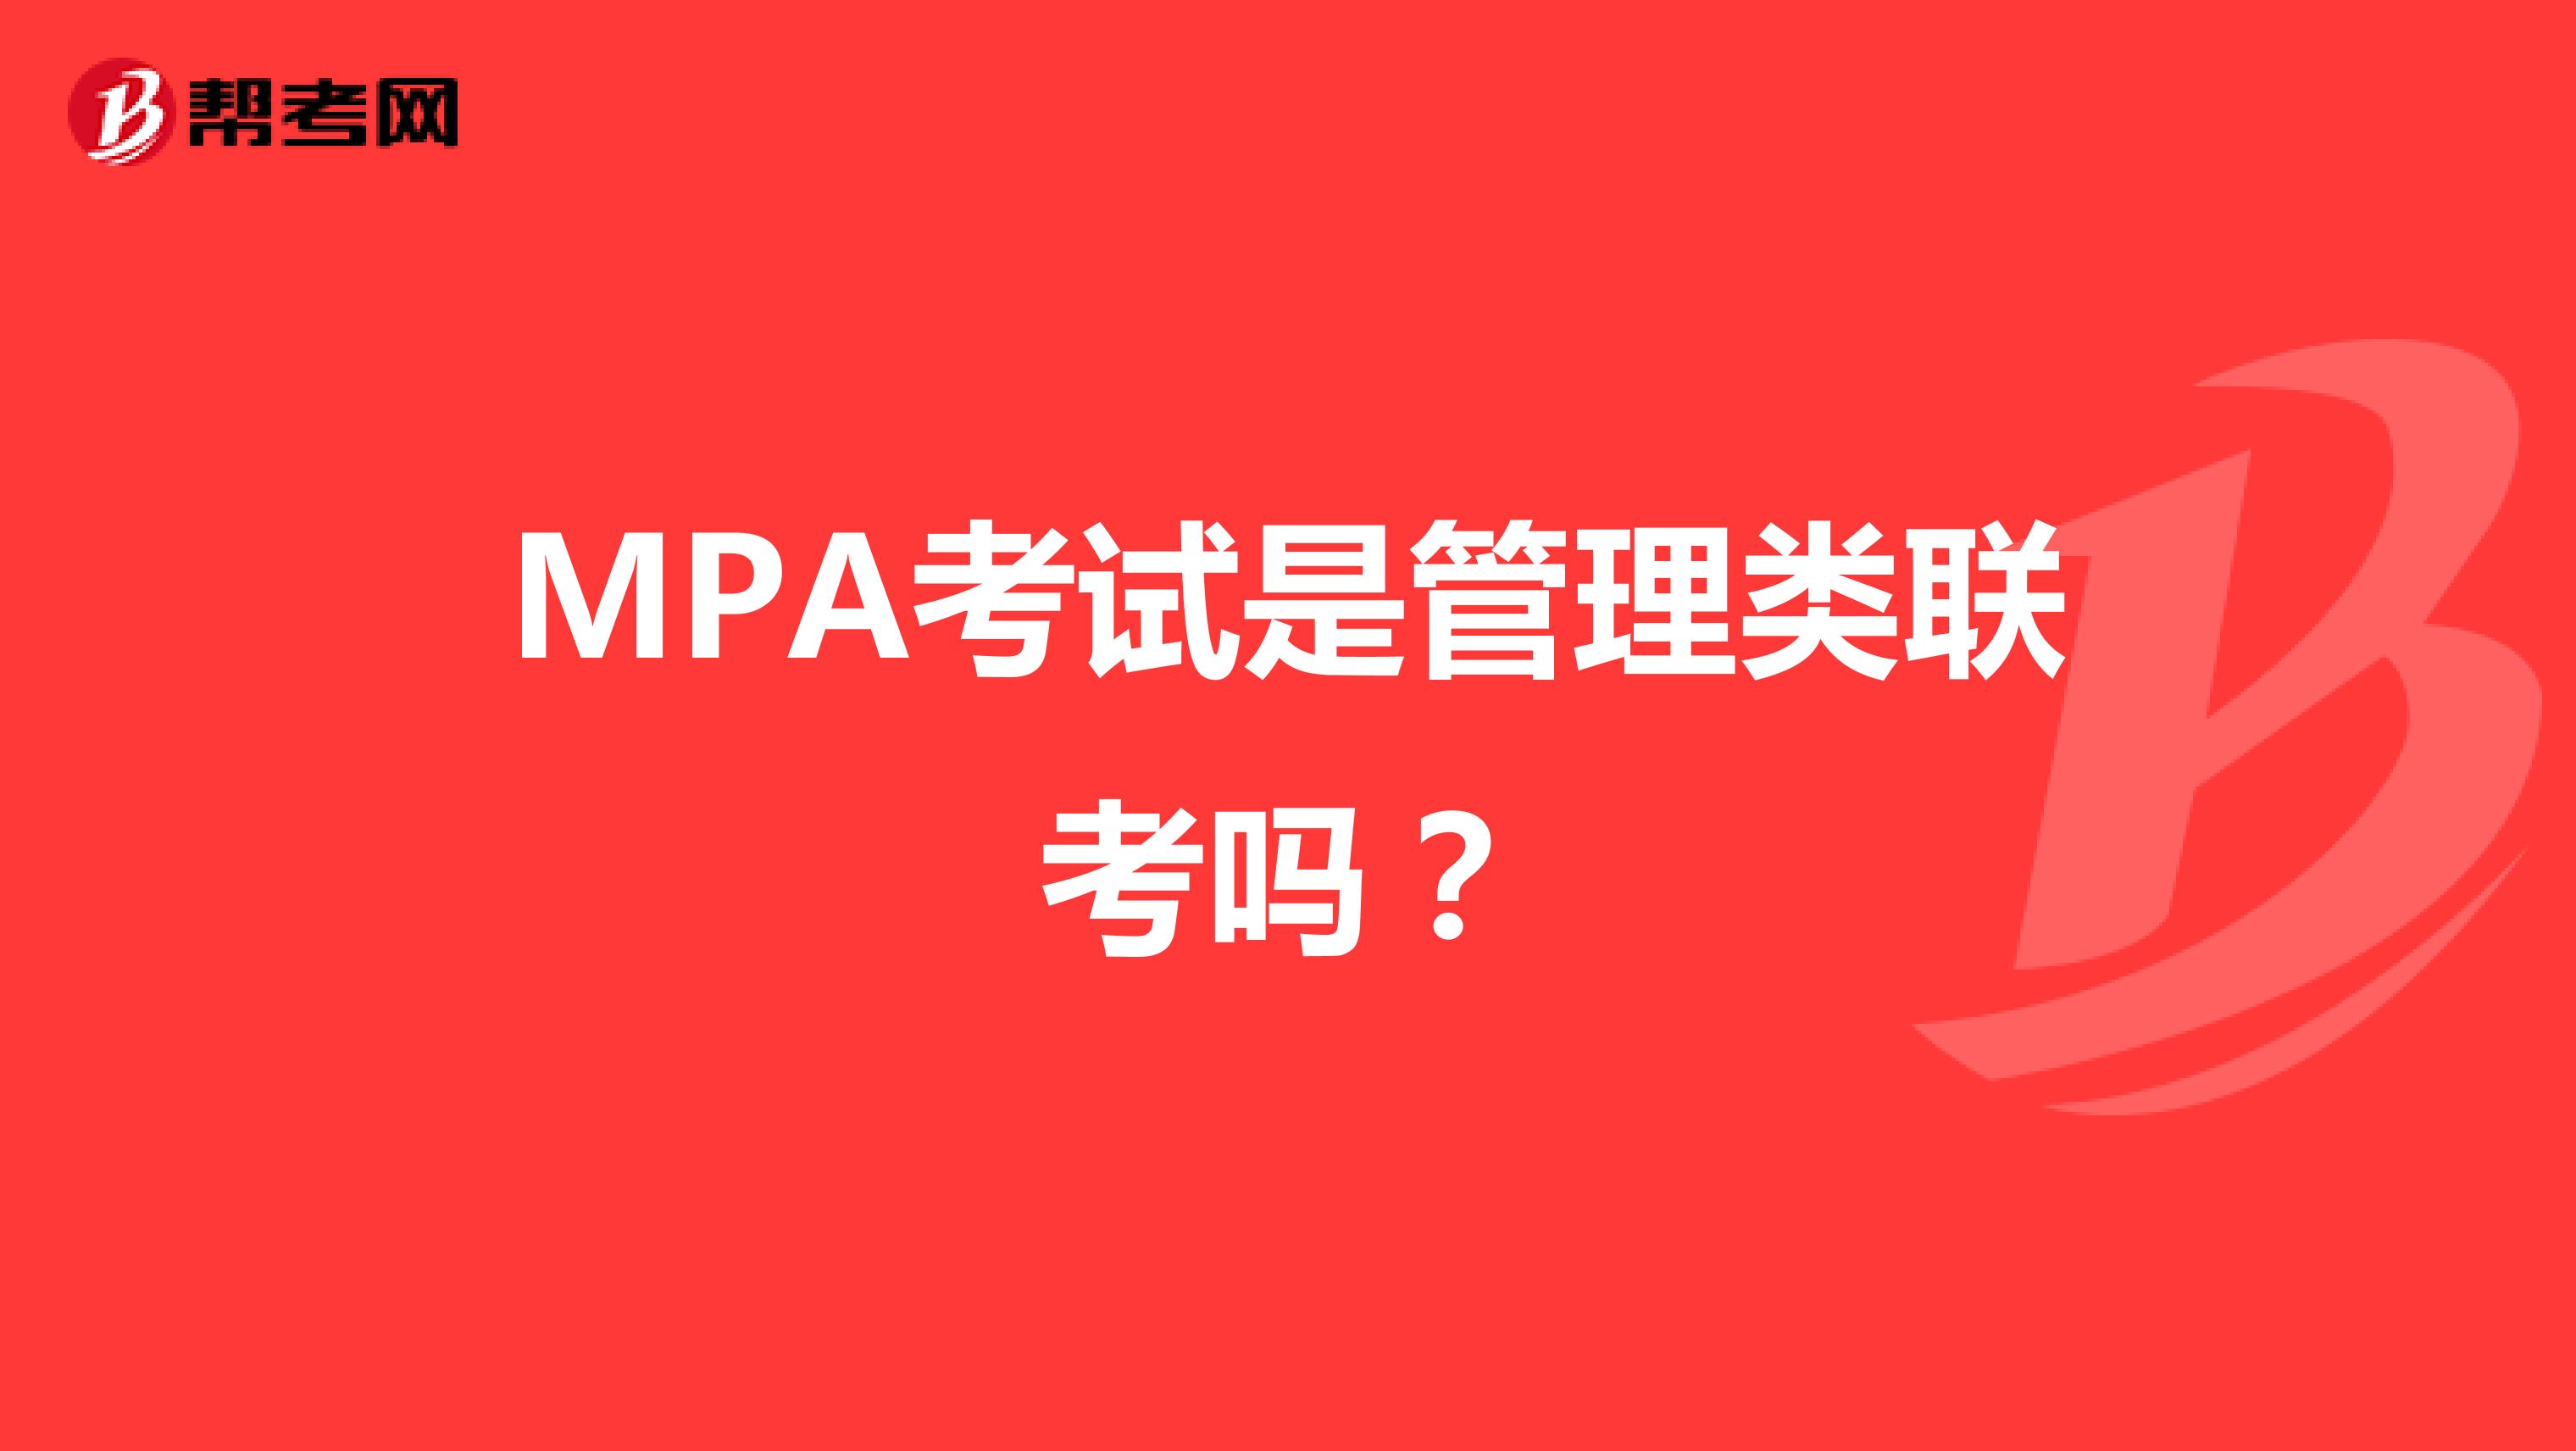 MPA考试是管理类联考吗？